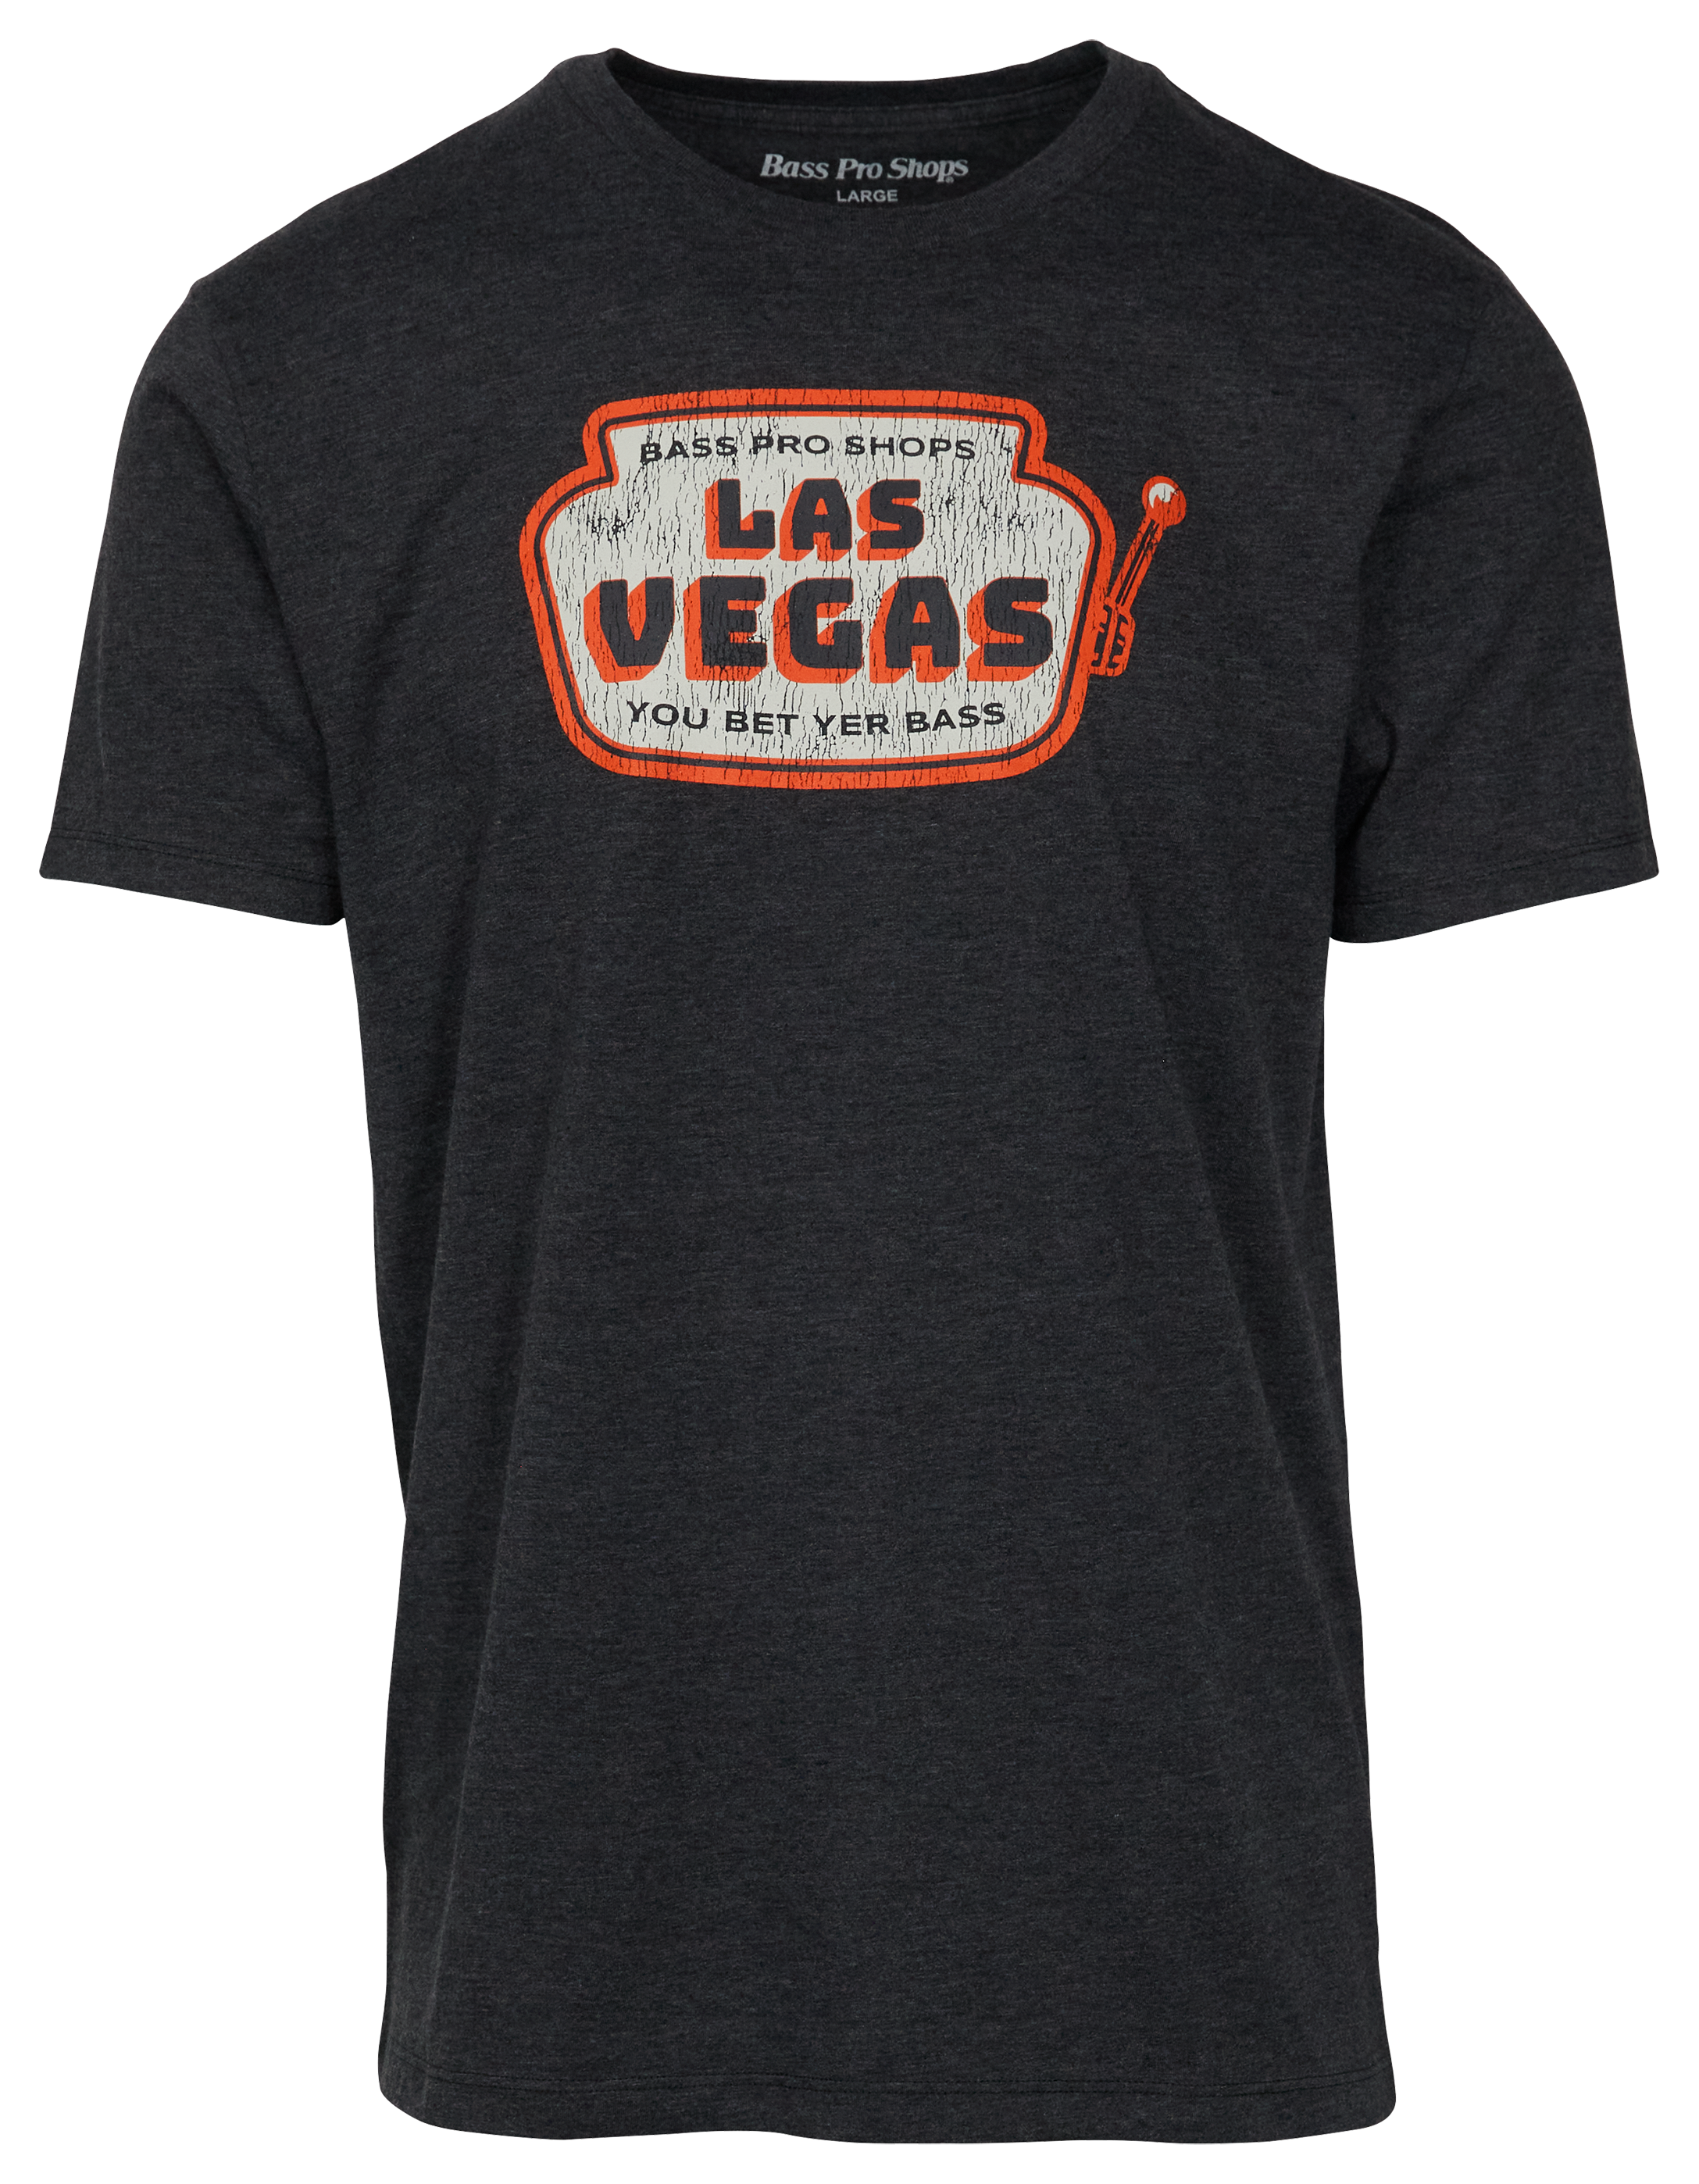 Bass Pro Shops Slot Machine Short-Sleeve T-Shirt for Men - Charcoal Heather - M